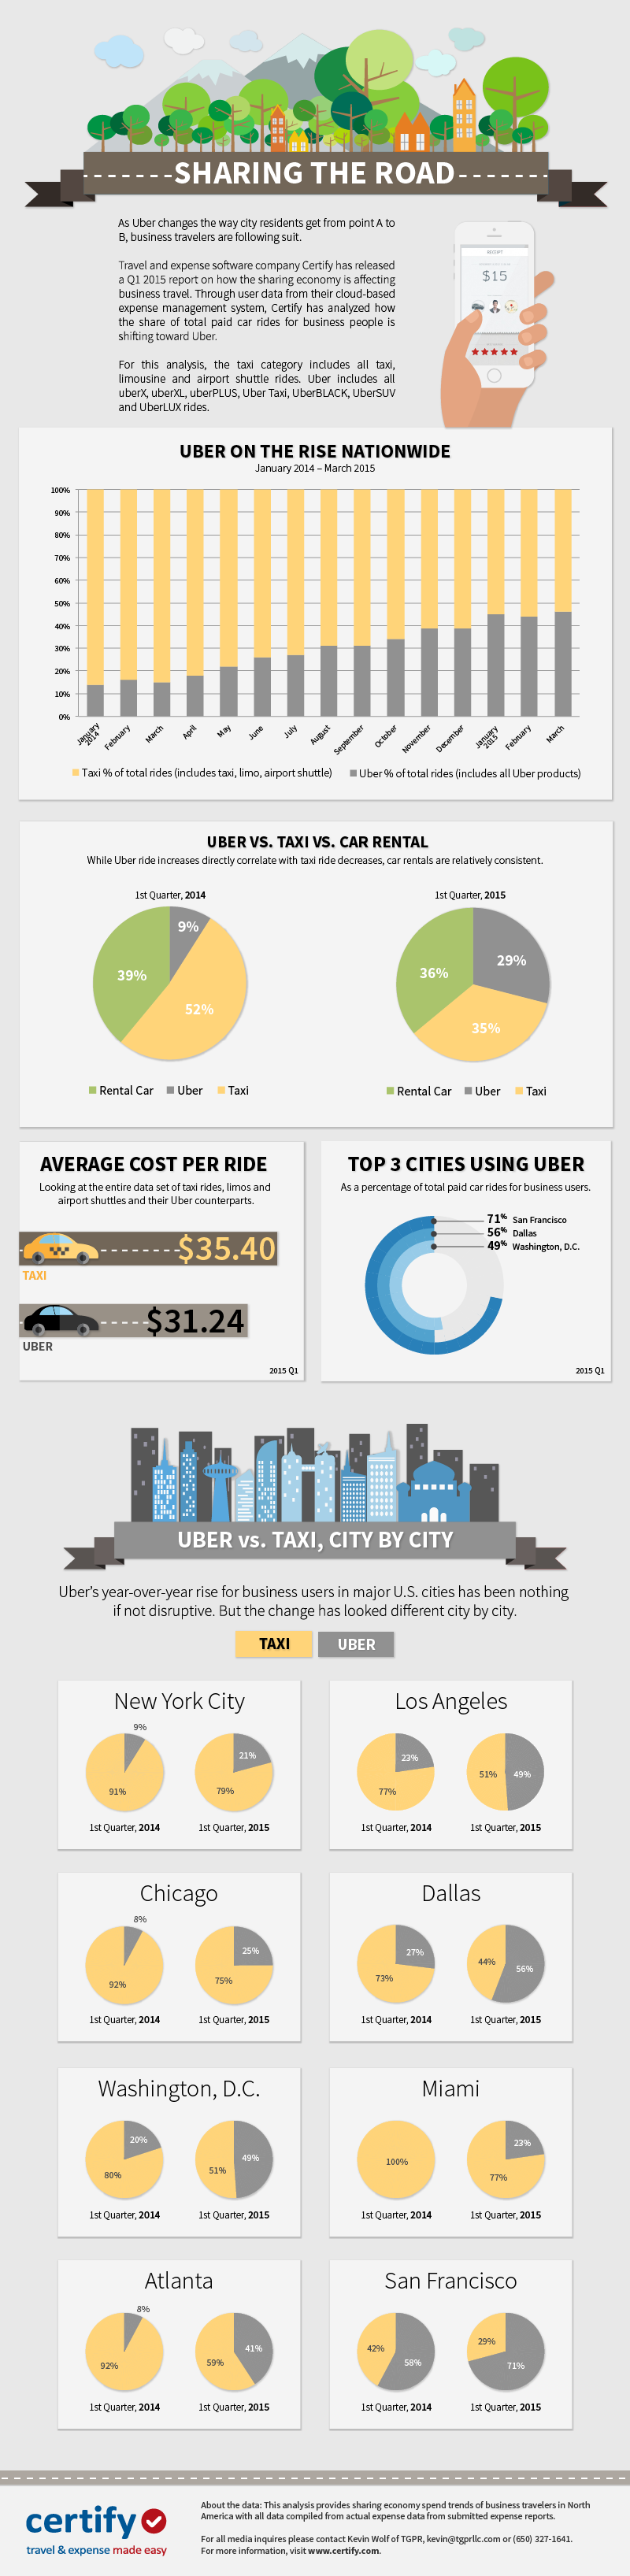 Sharing the Road: Business Travelers Increasingly Choose Uber